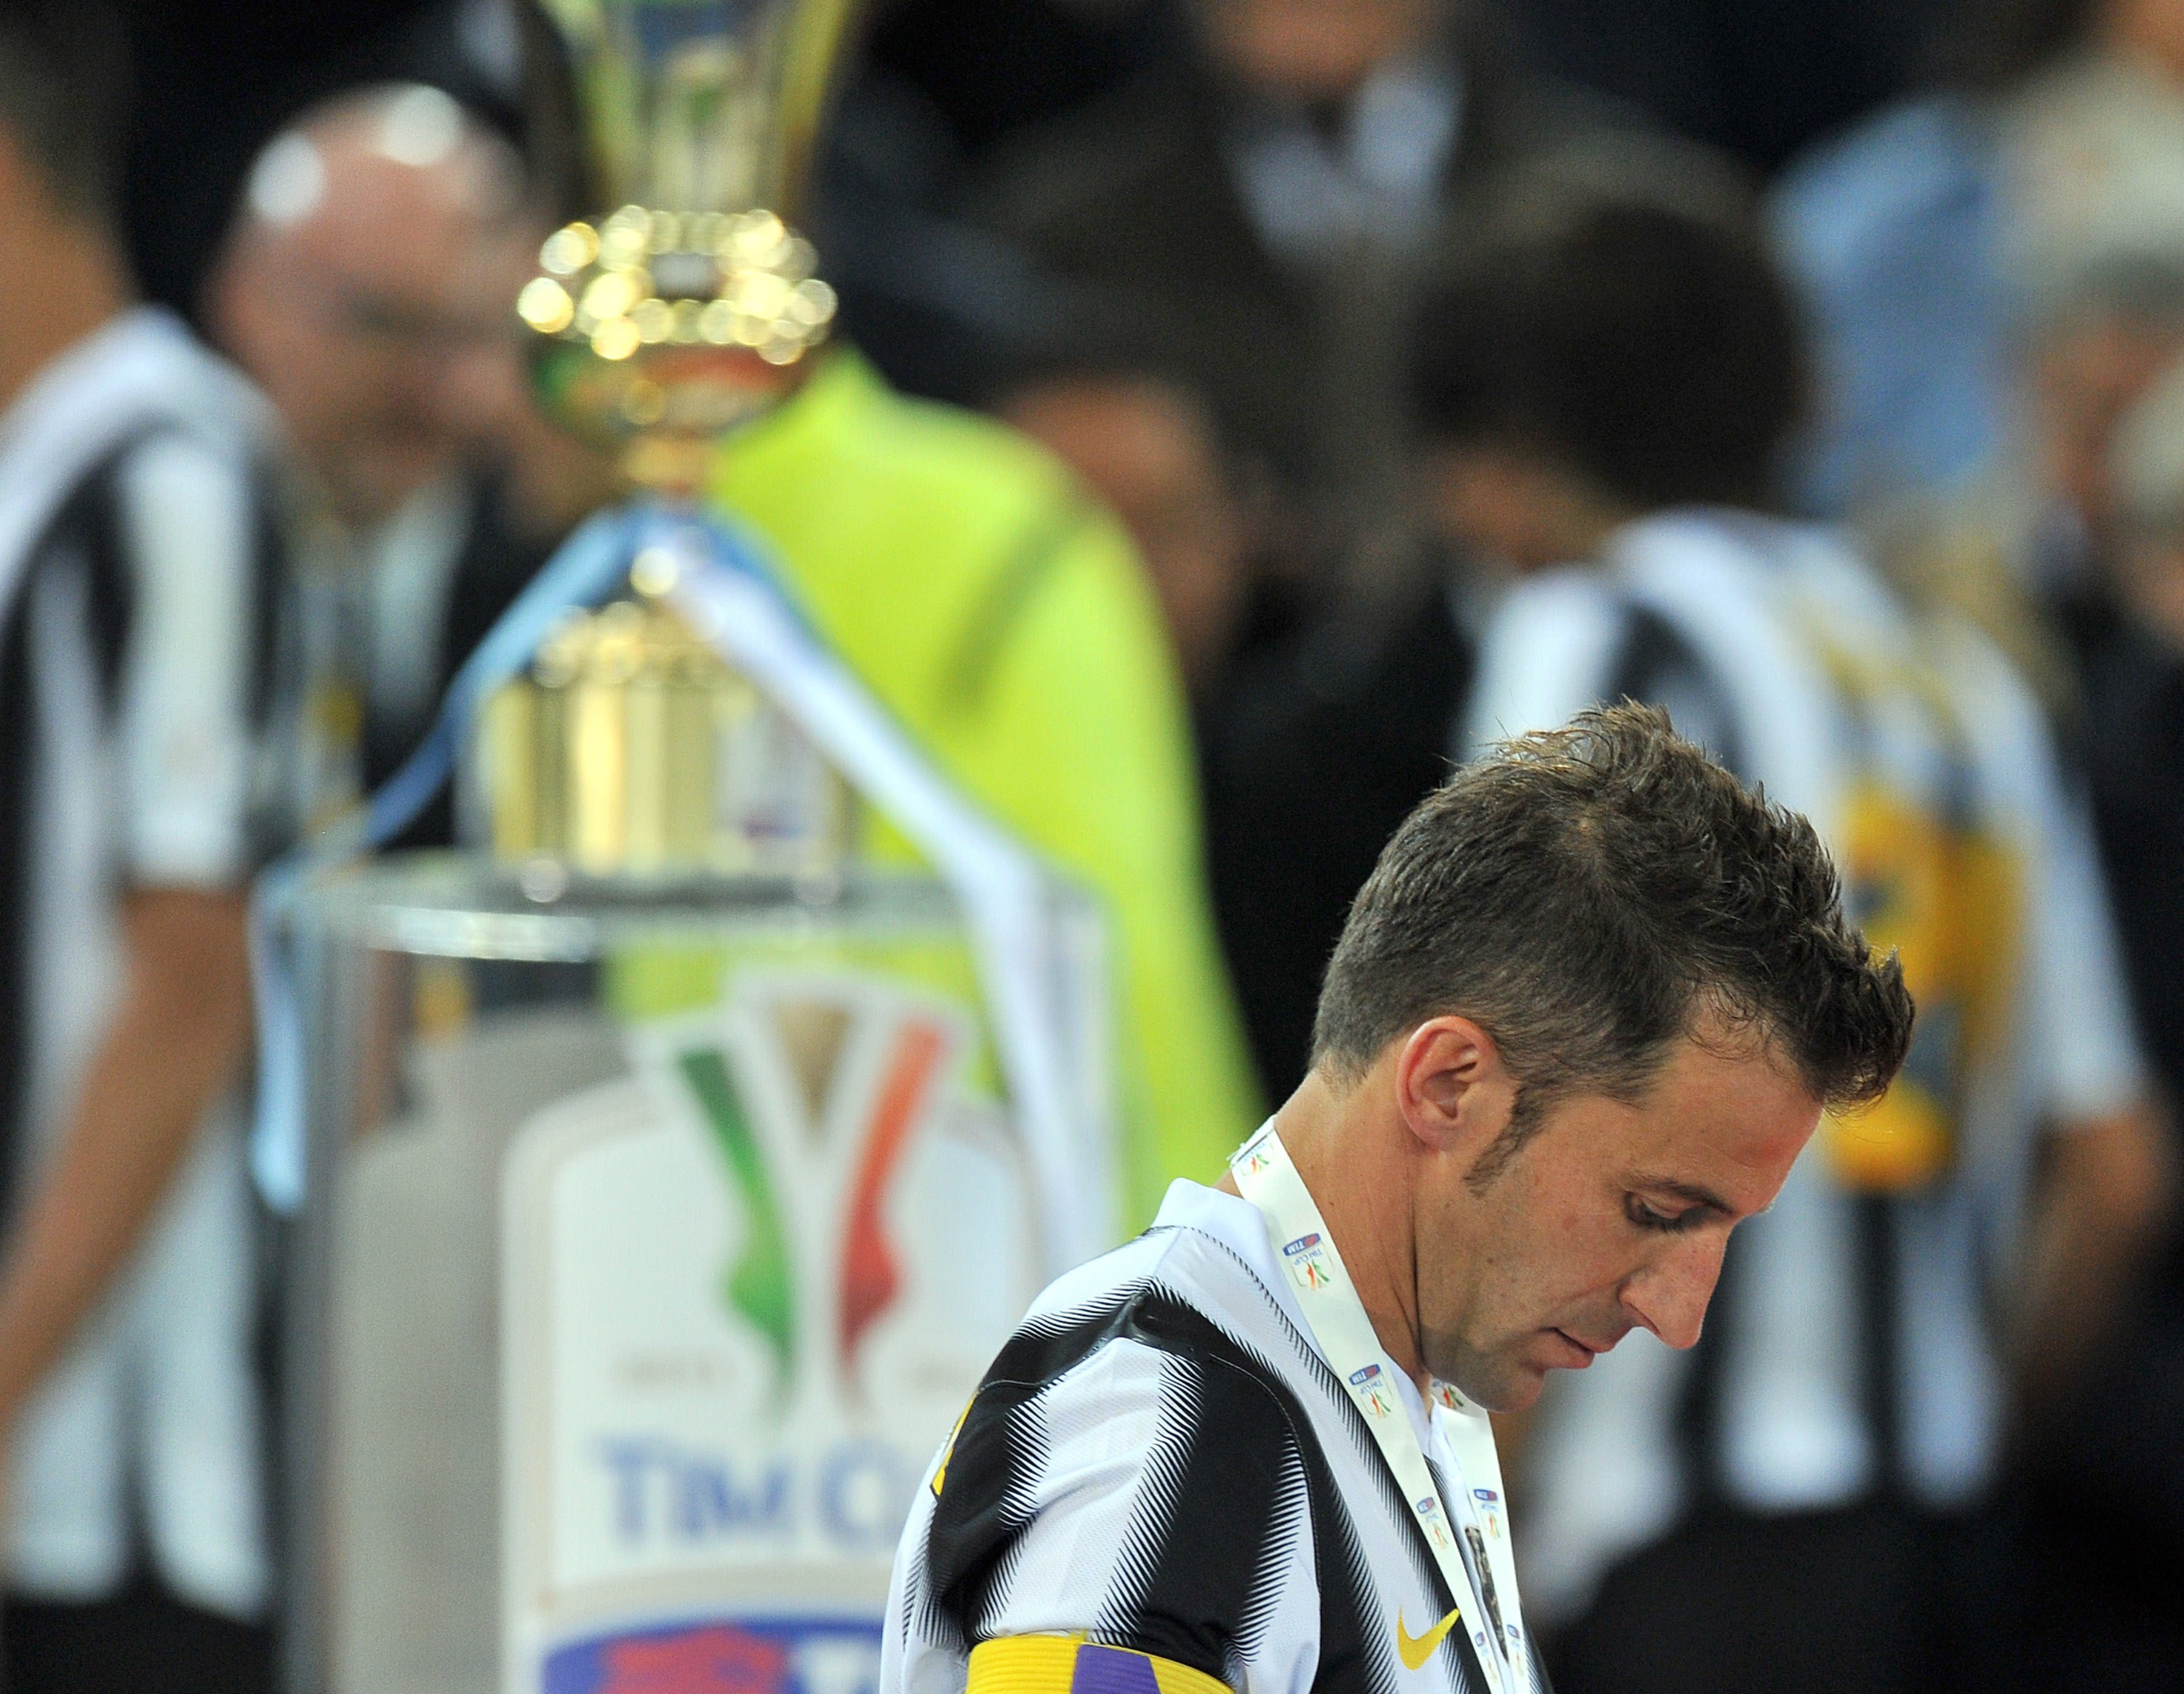 The match-fixing scandal that got Juventus relegated